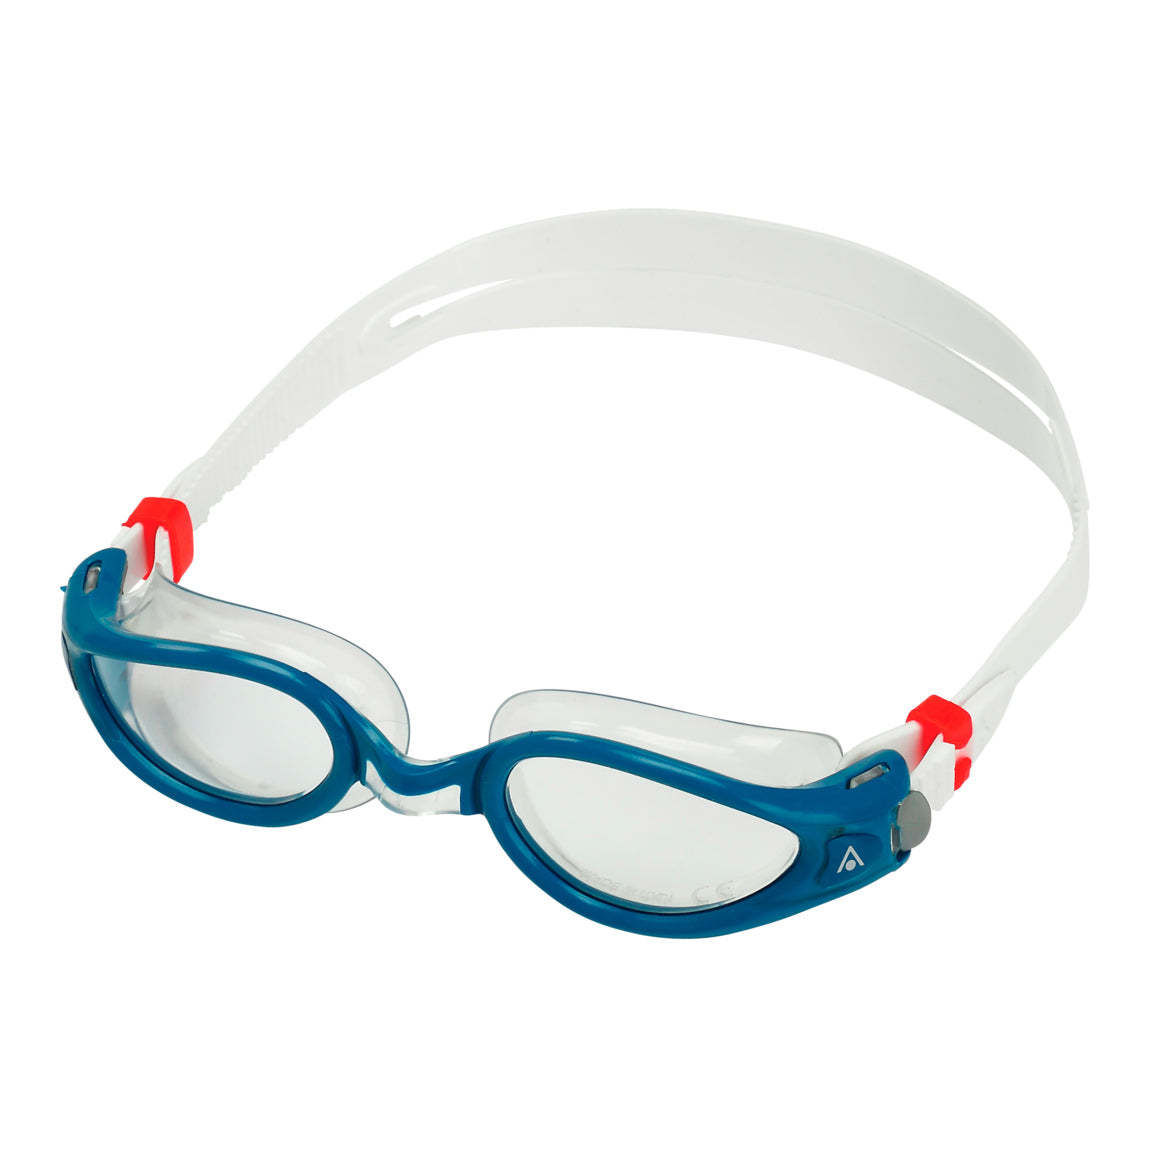 Aquasphere Adult Goggles Kaiman Exo Transparent